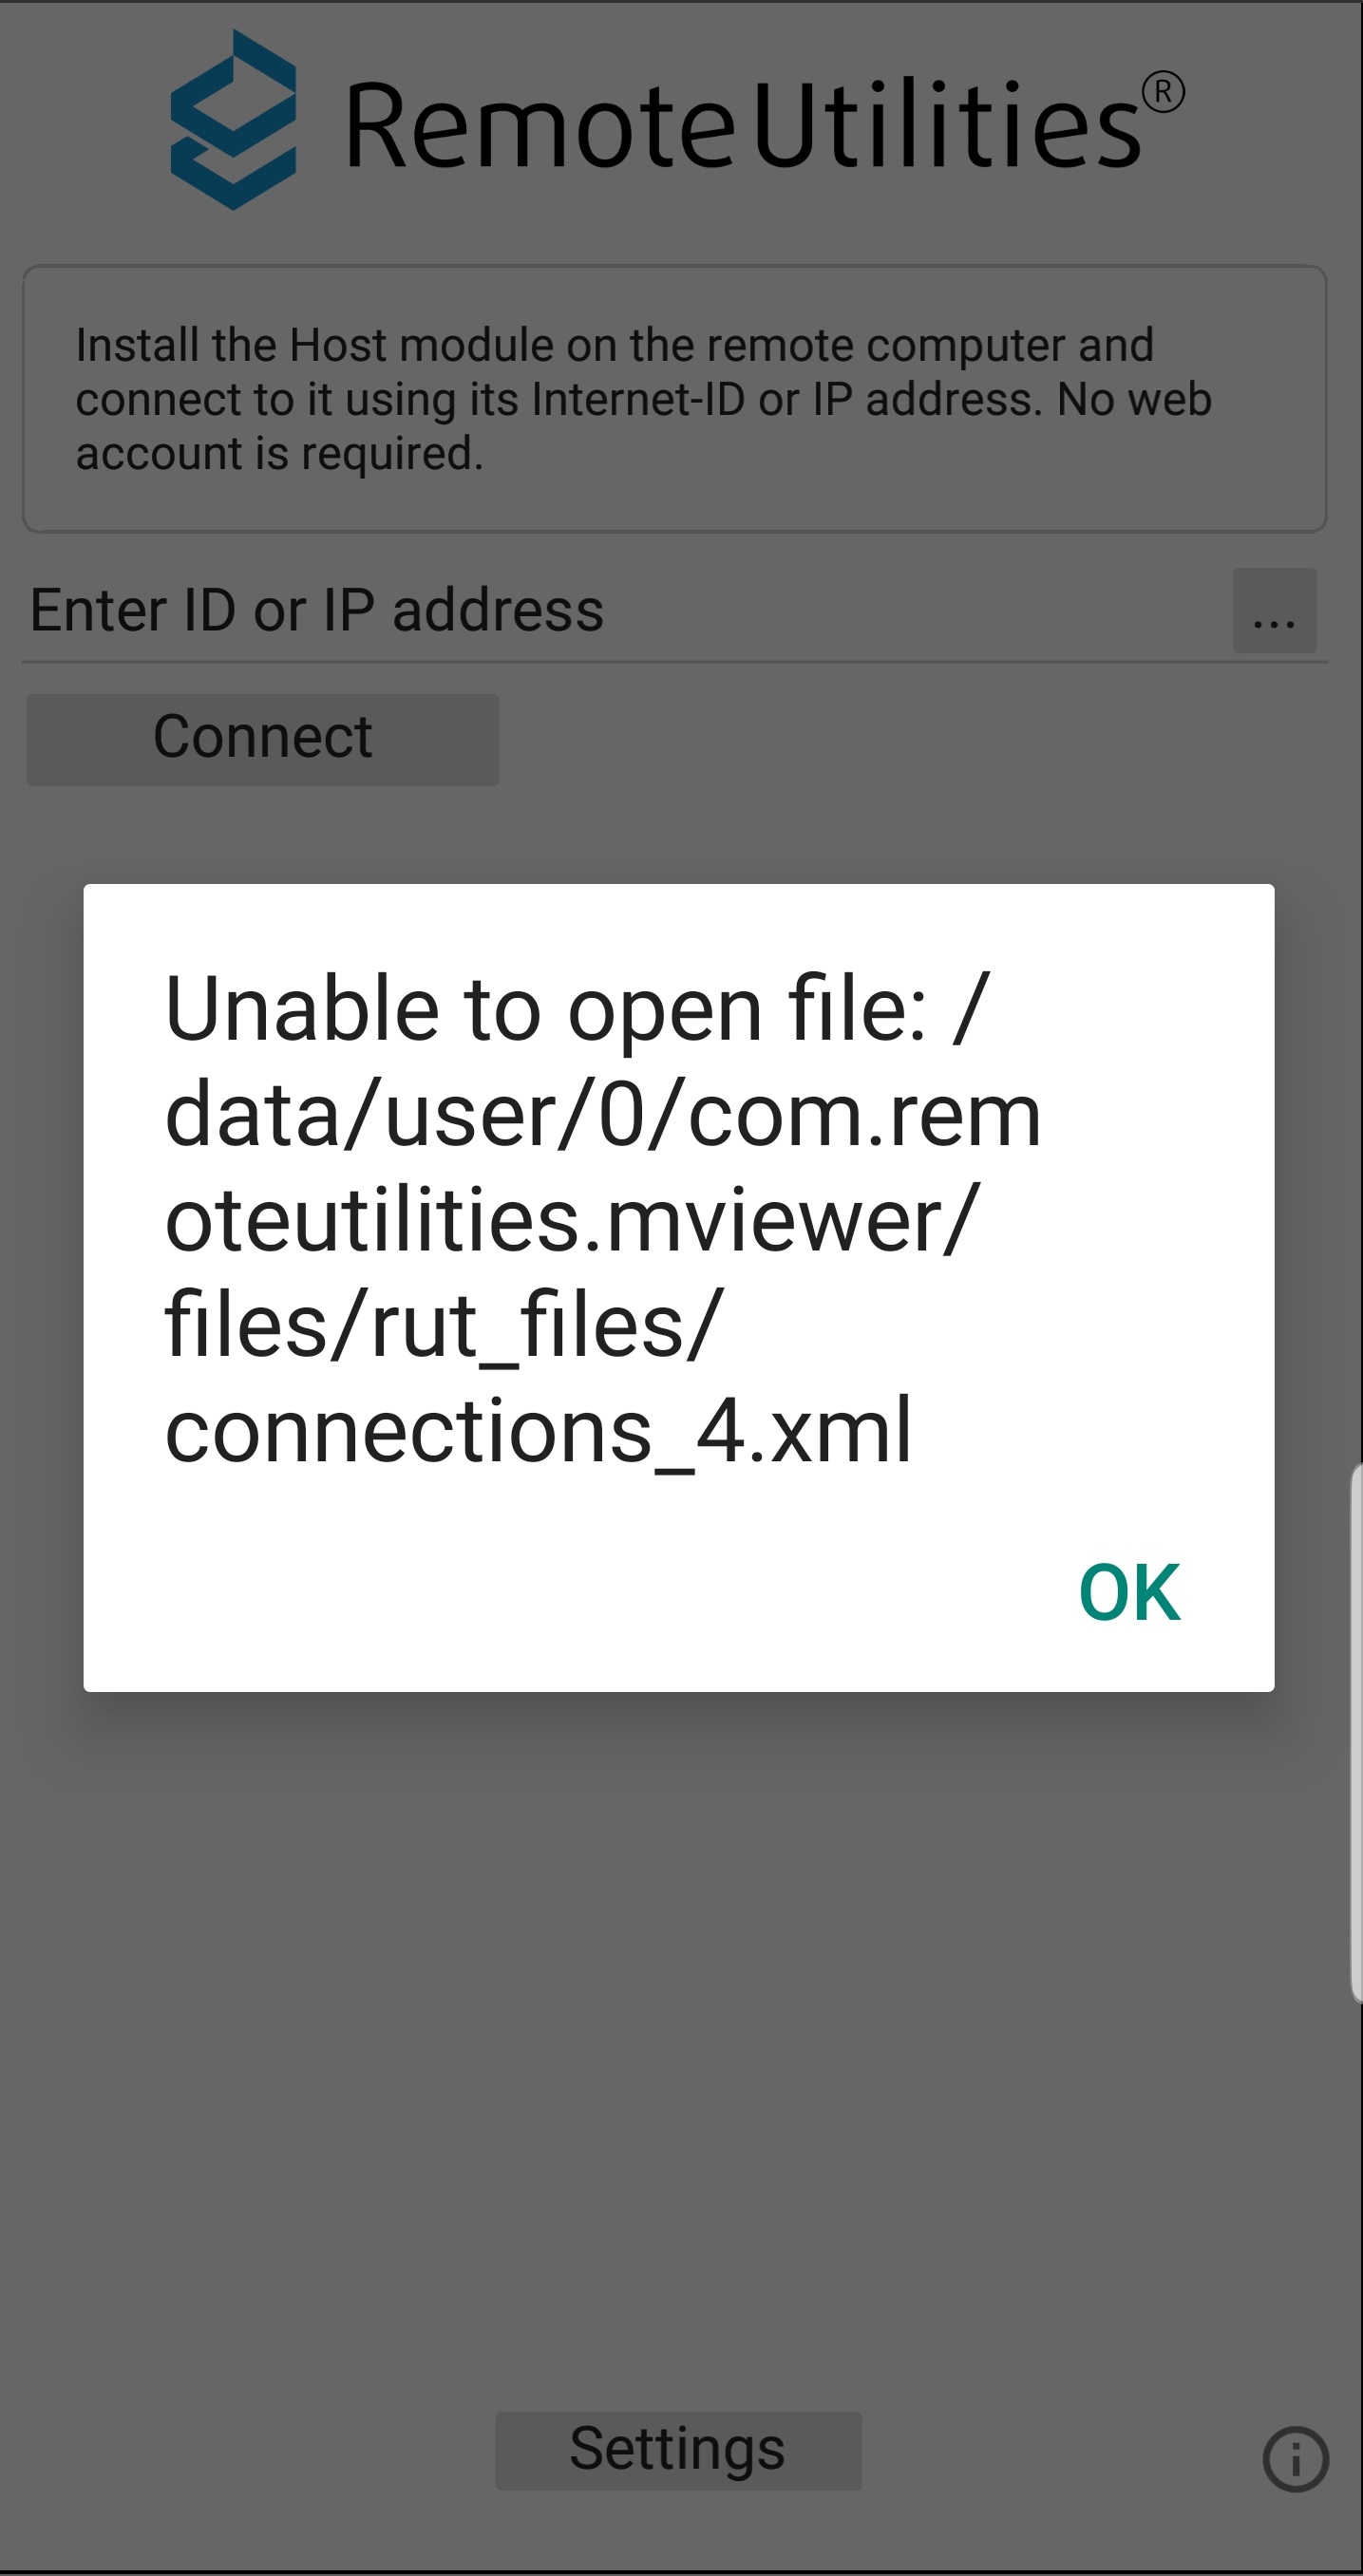 Android client errors make it unusable